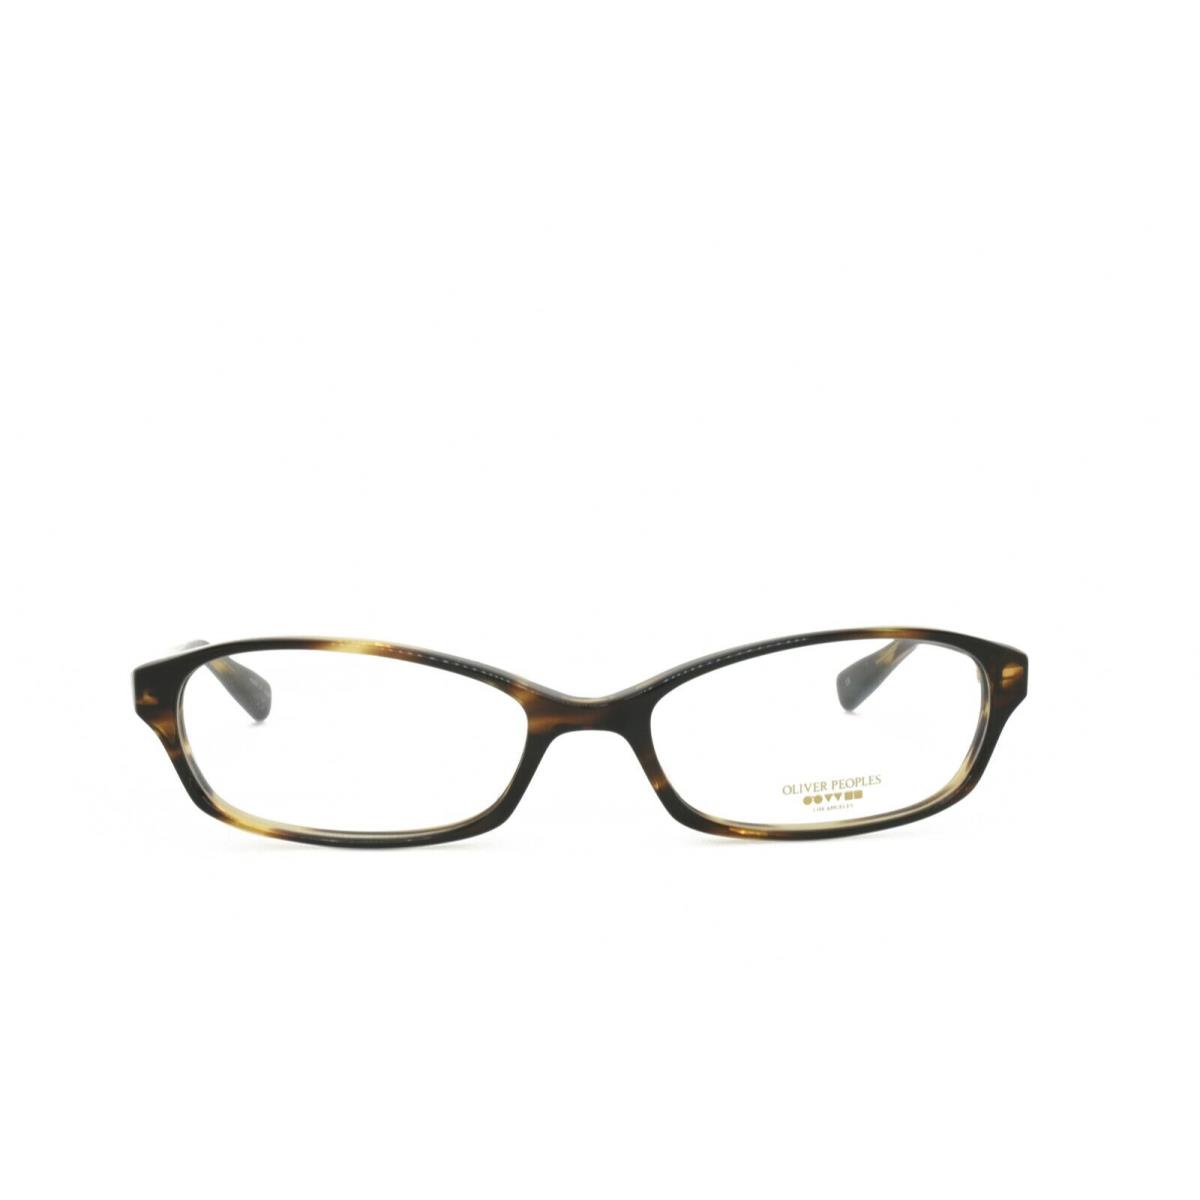 Oliver Peoples Cady Coco 5021 Rx Eyeglasses 50-16-135 - Frame: